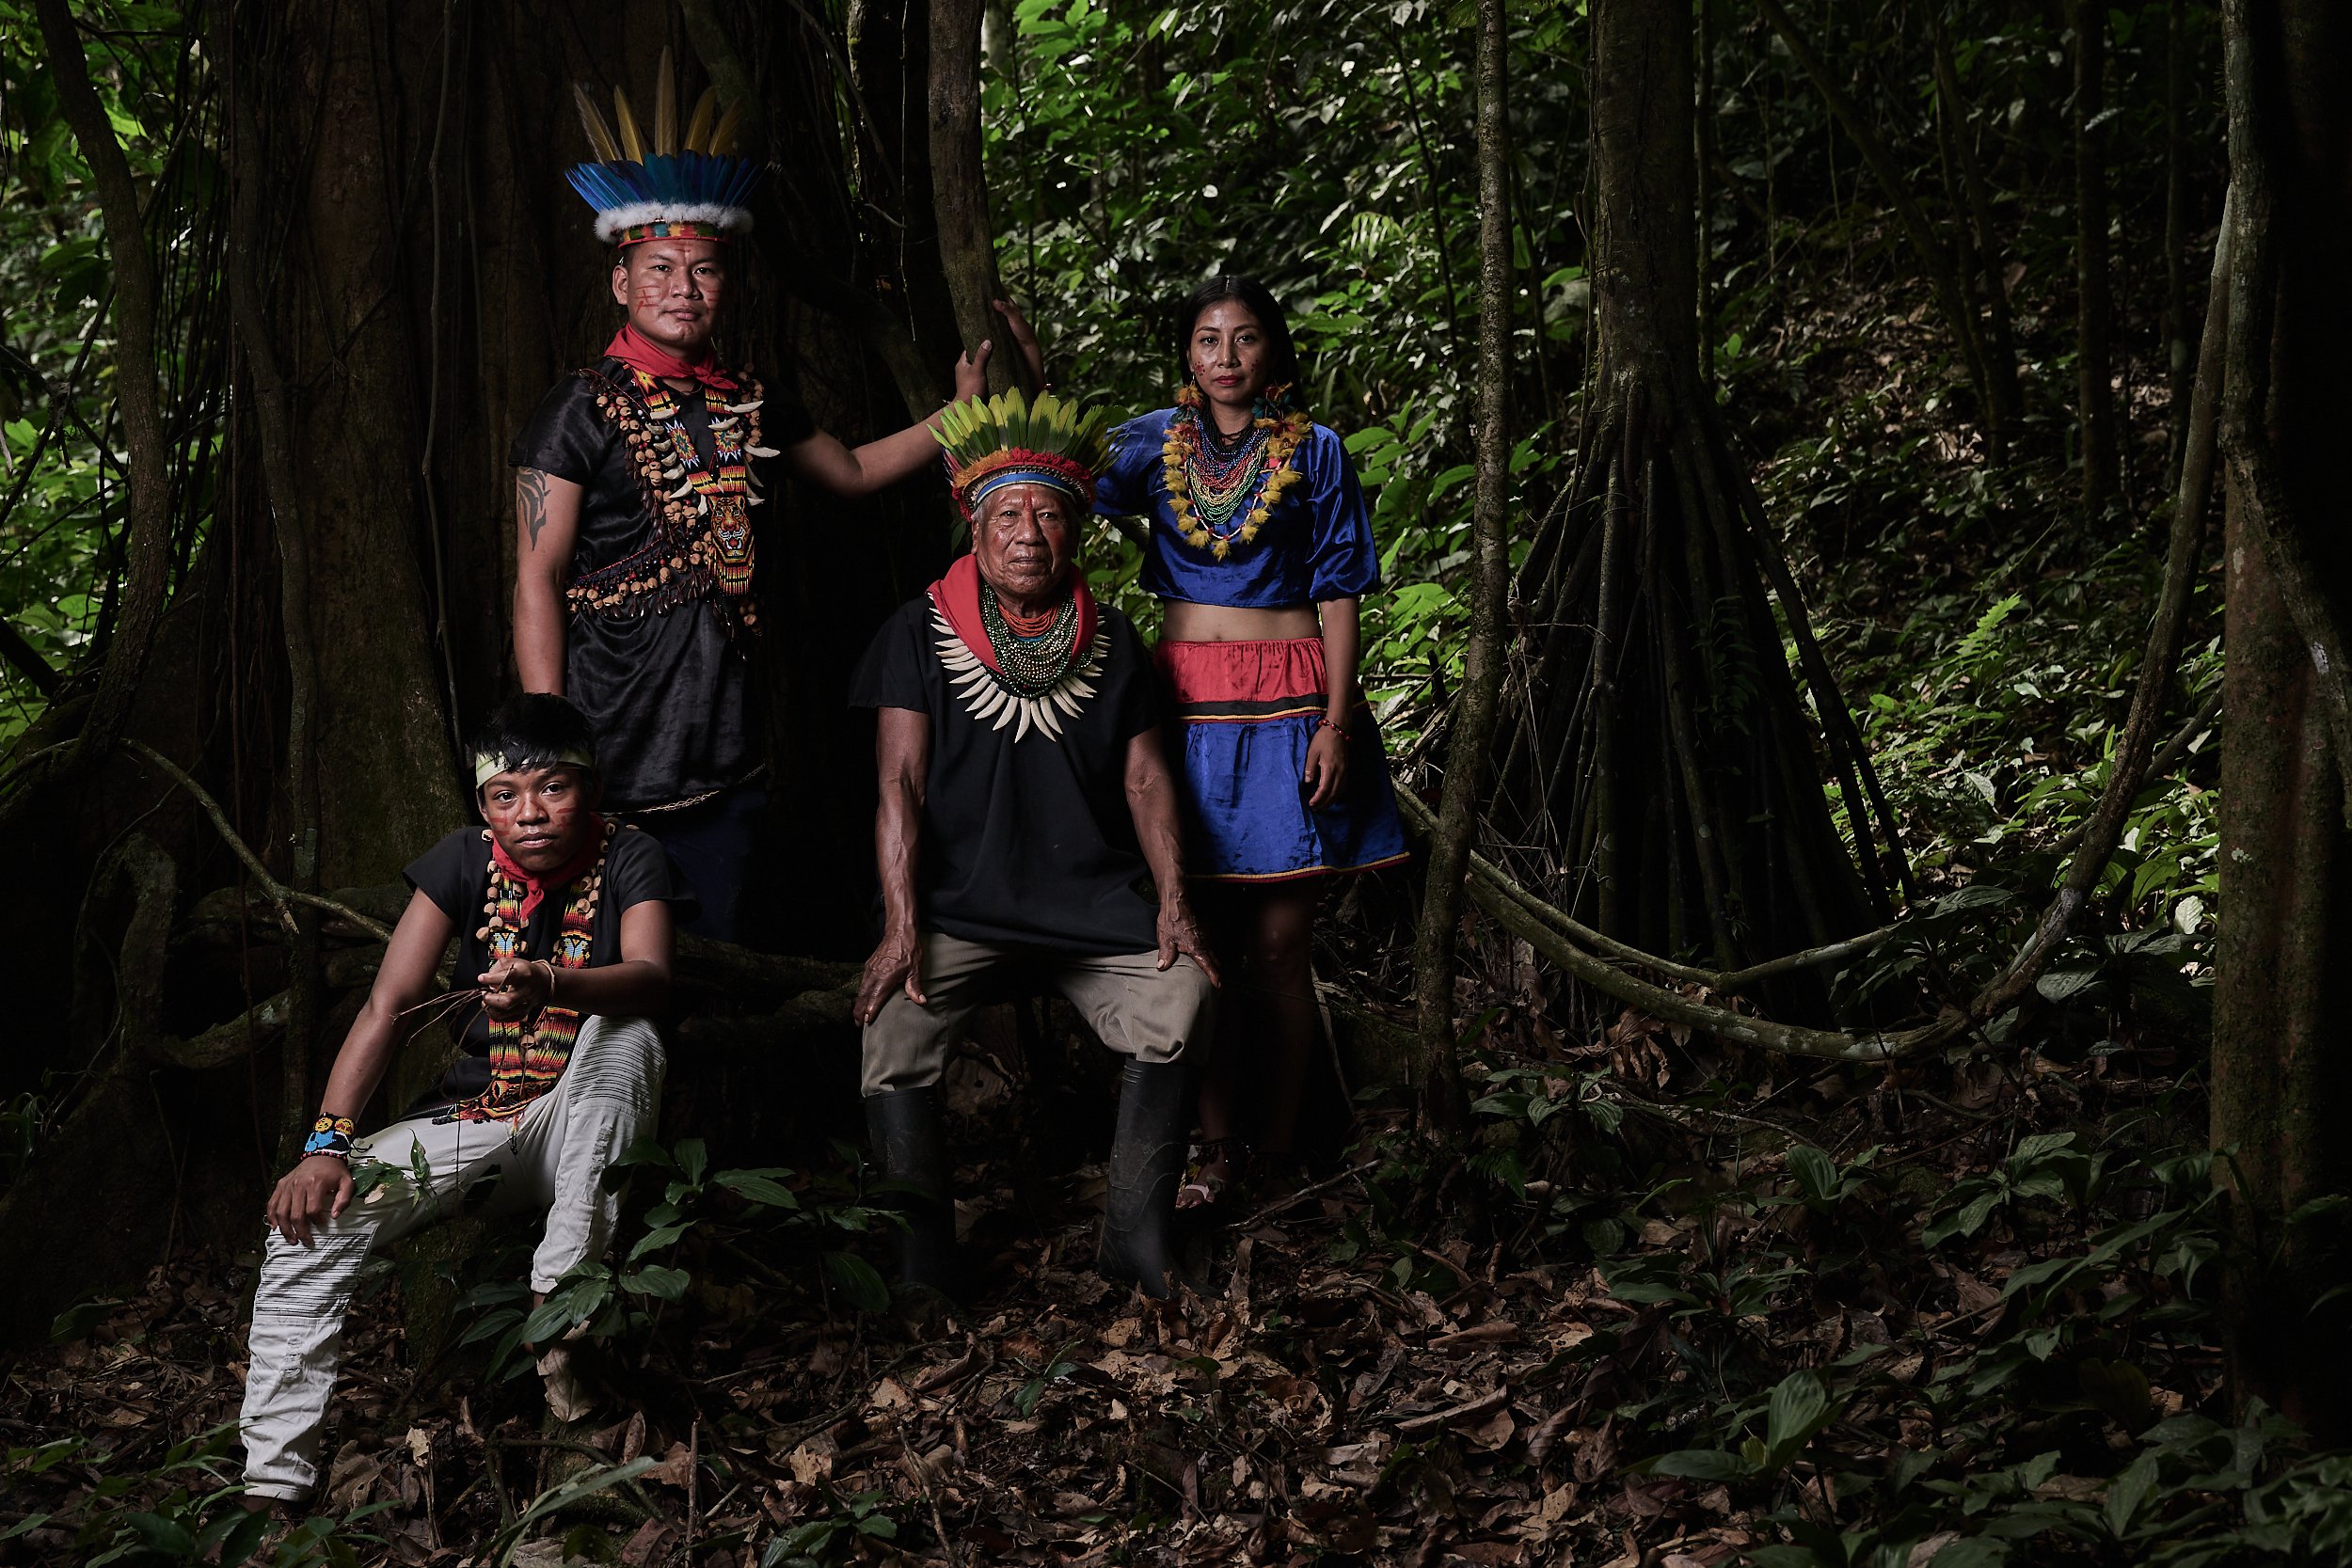 Members of the Cofan tribe